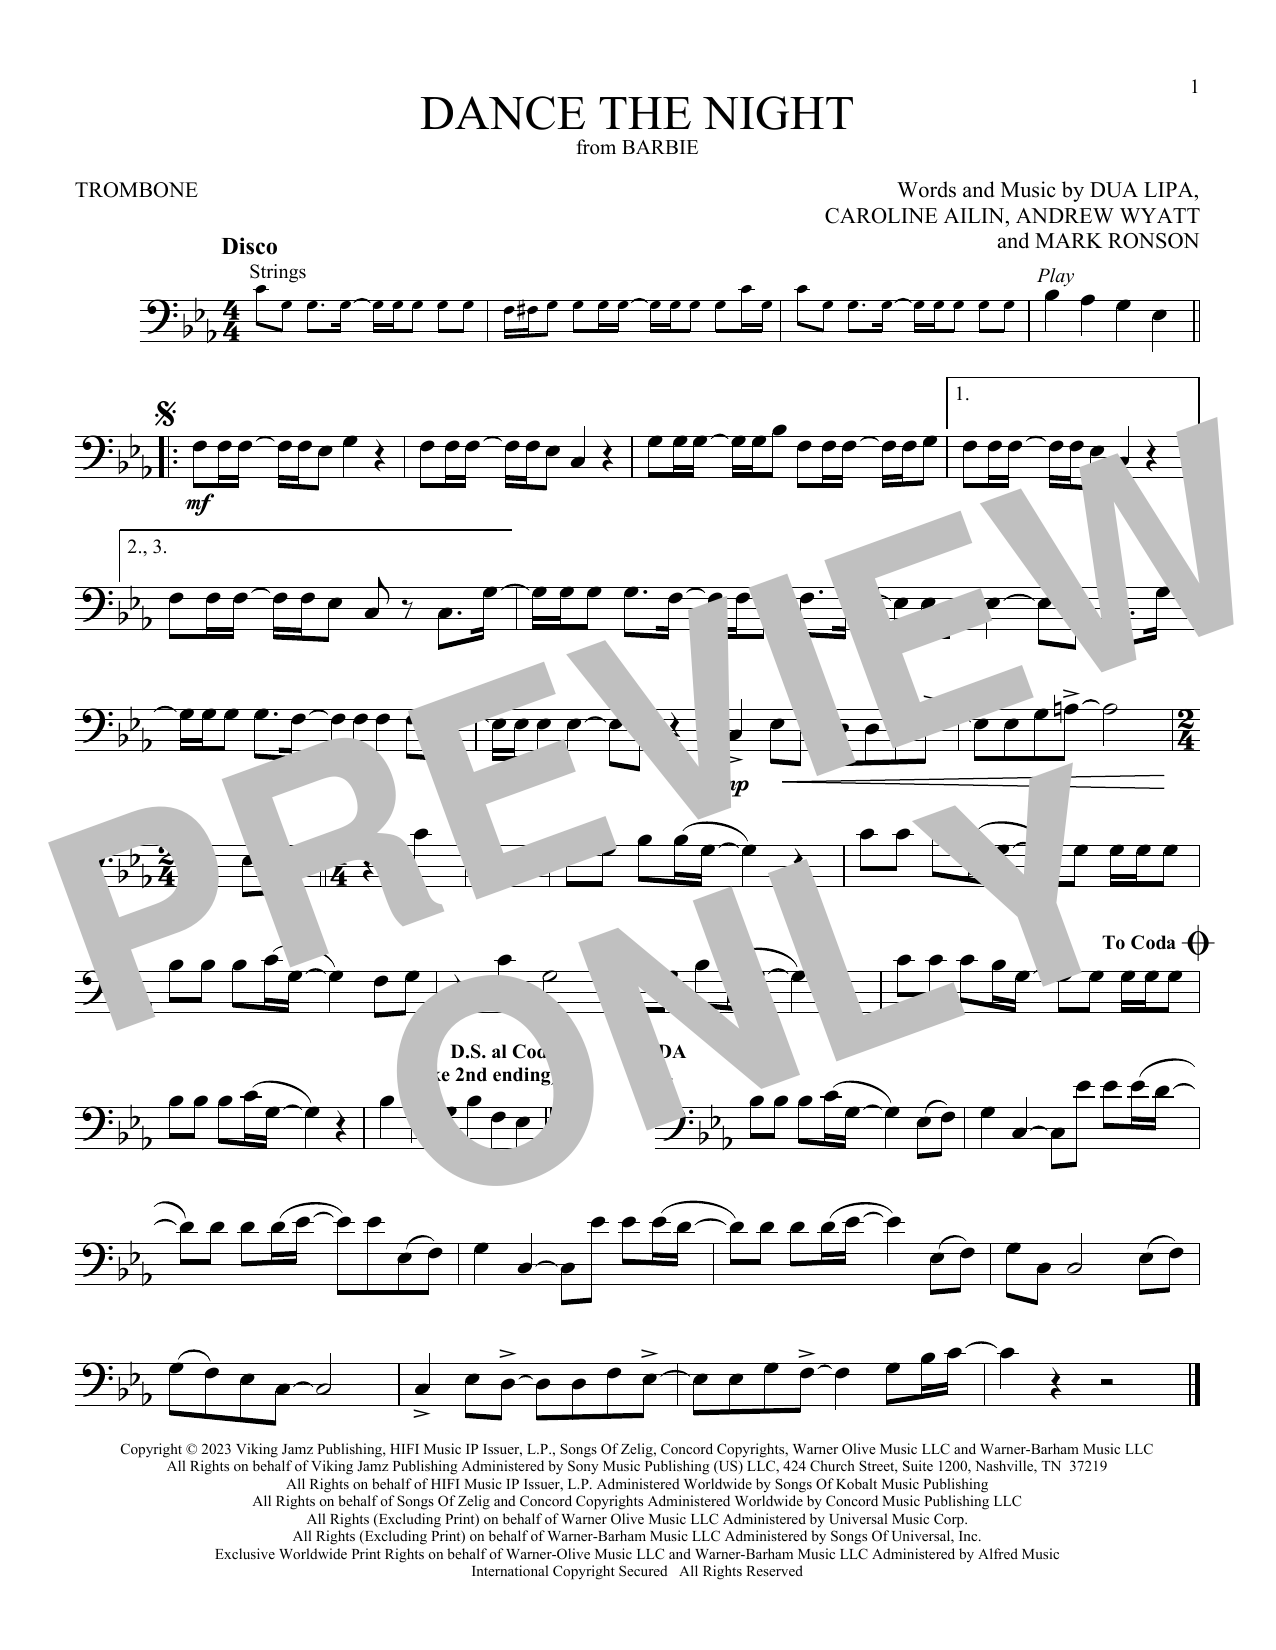 Dua Lipa Dance The Night (from Barbie) sheet music notes printable PDF score